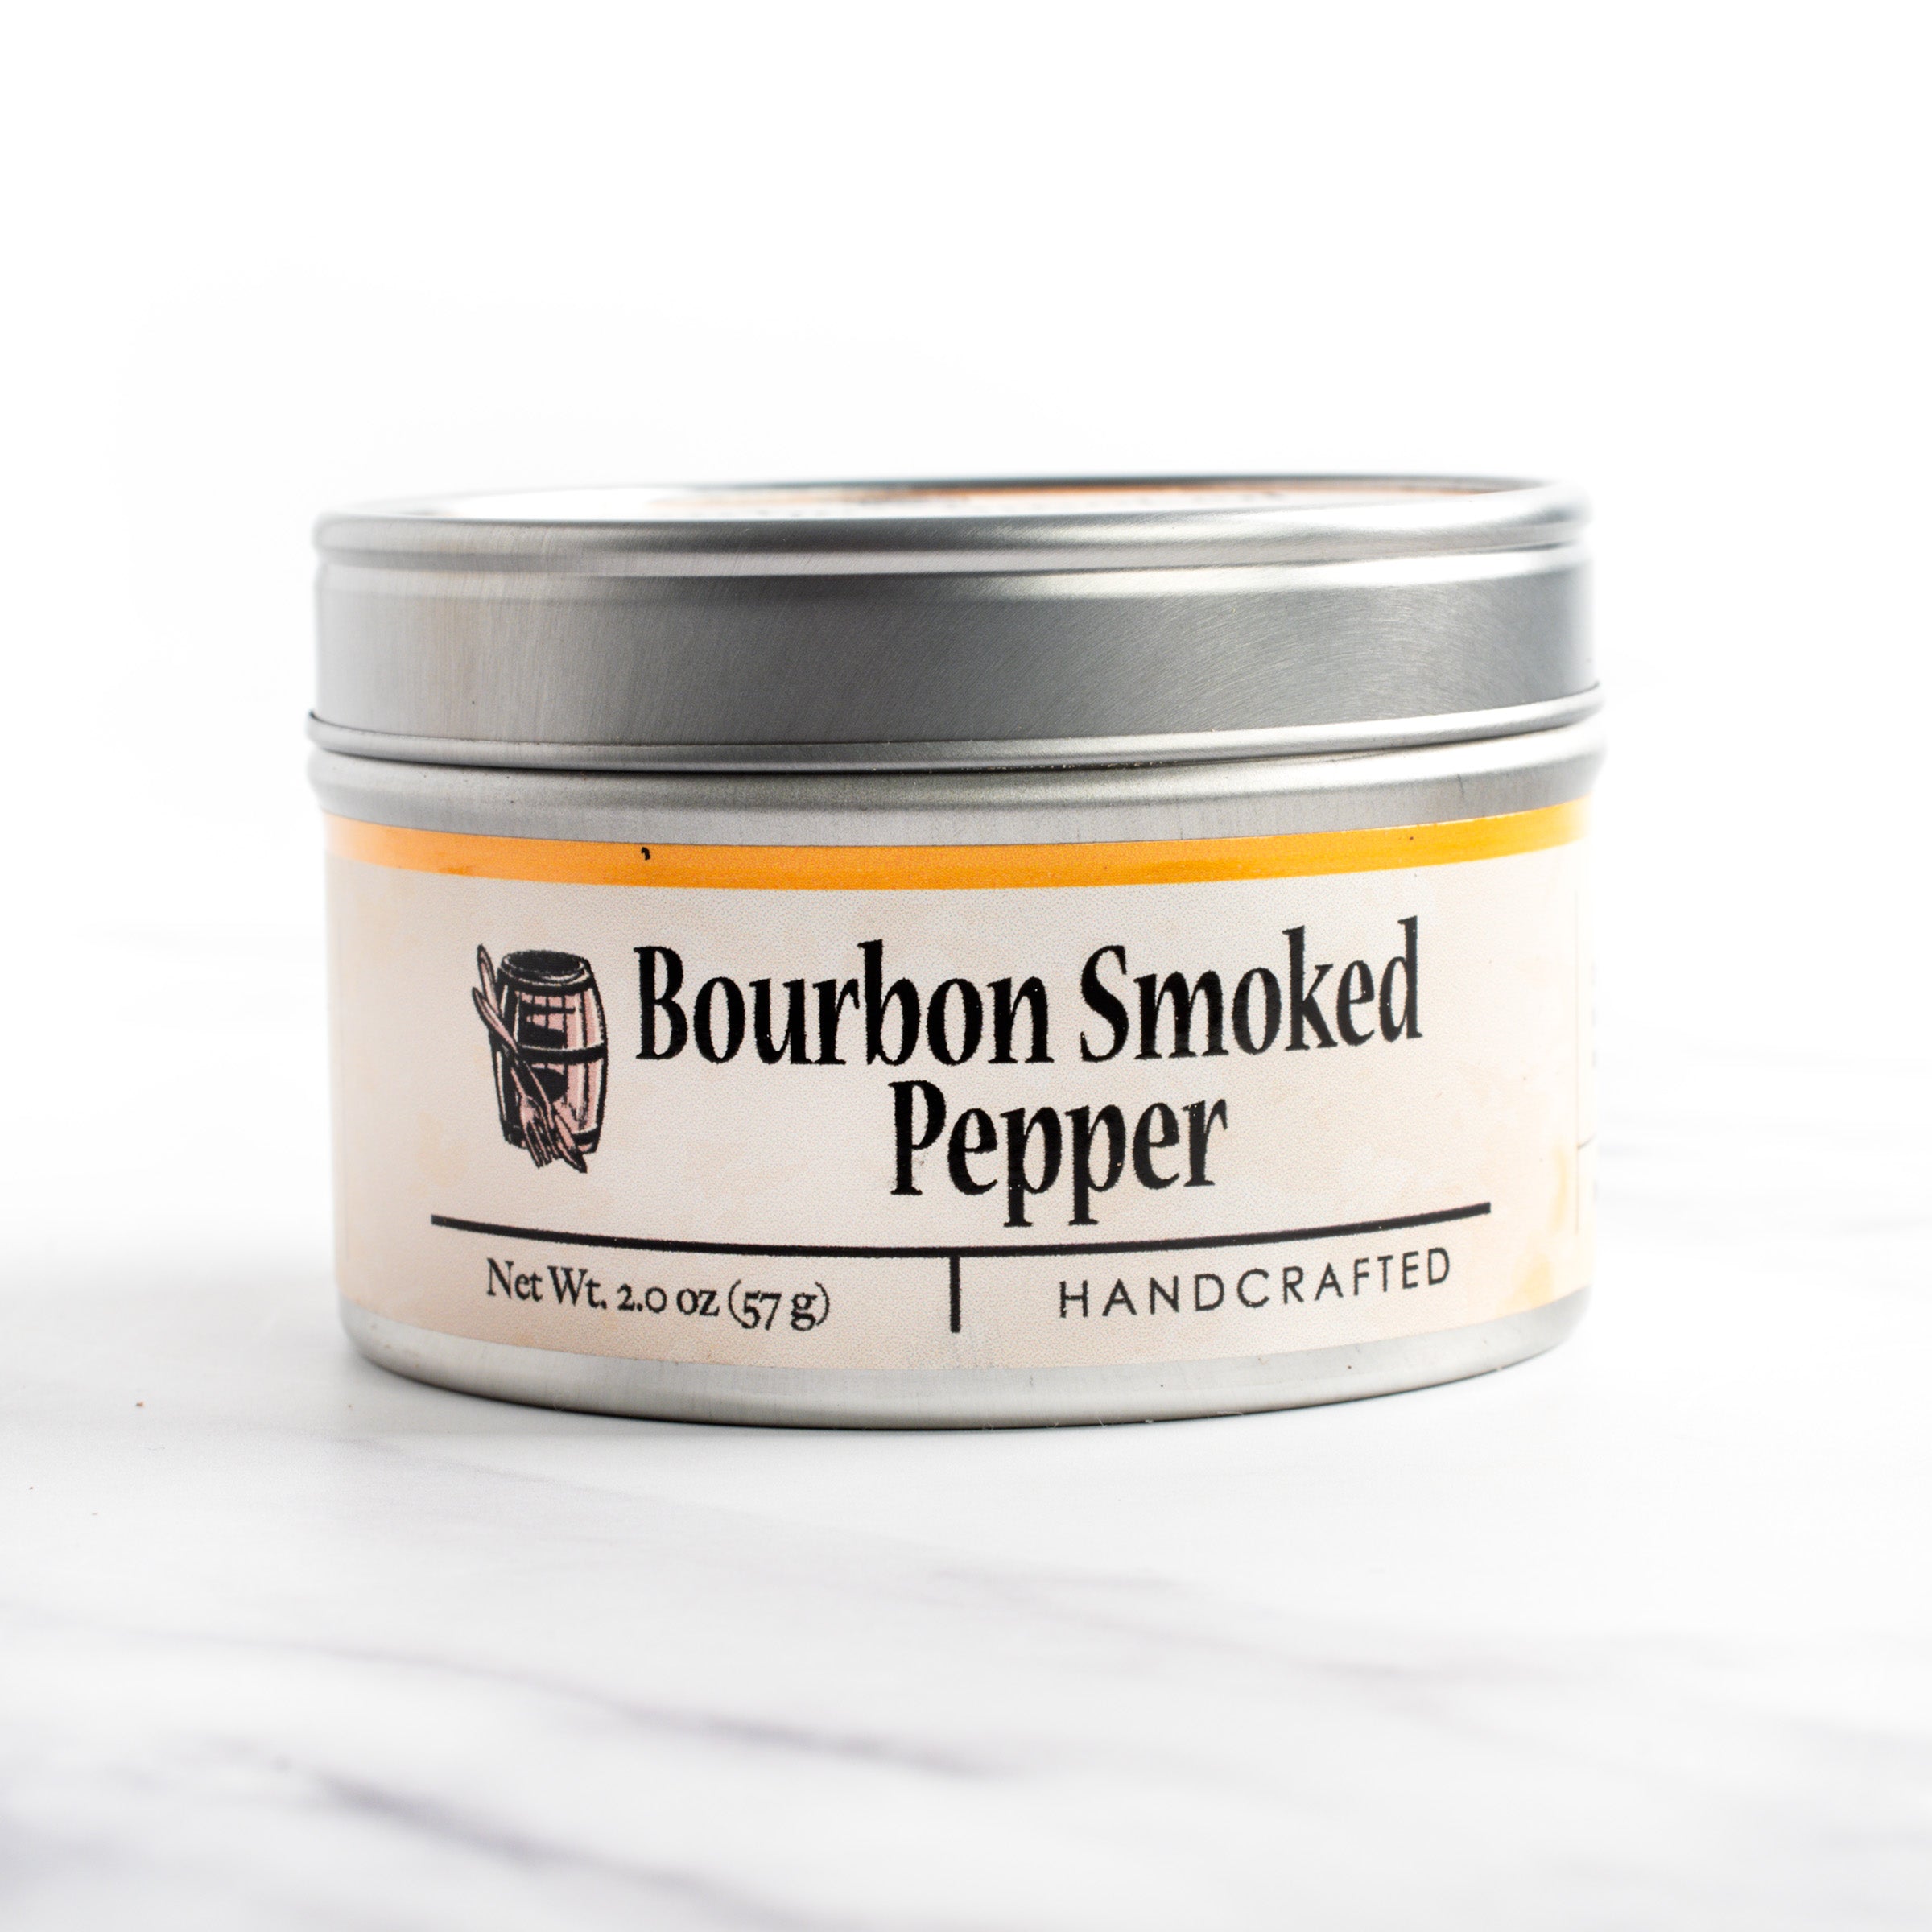 Smoked Black Peppercorns - Bourbon Barrel Foods - Rubs, Spices & Seasonings